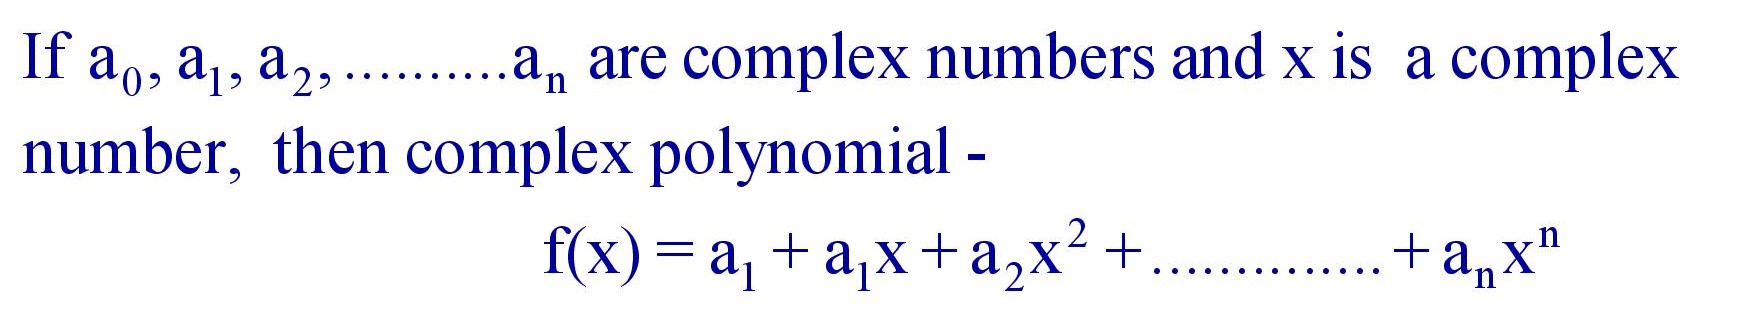 Complex Polynomial